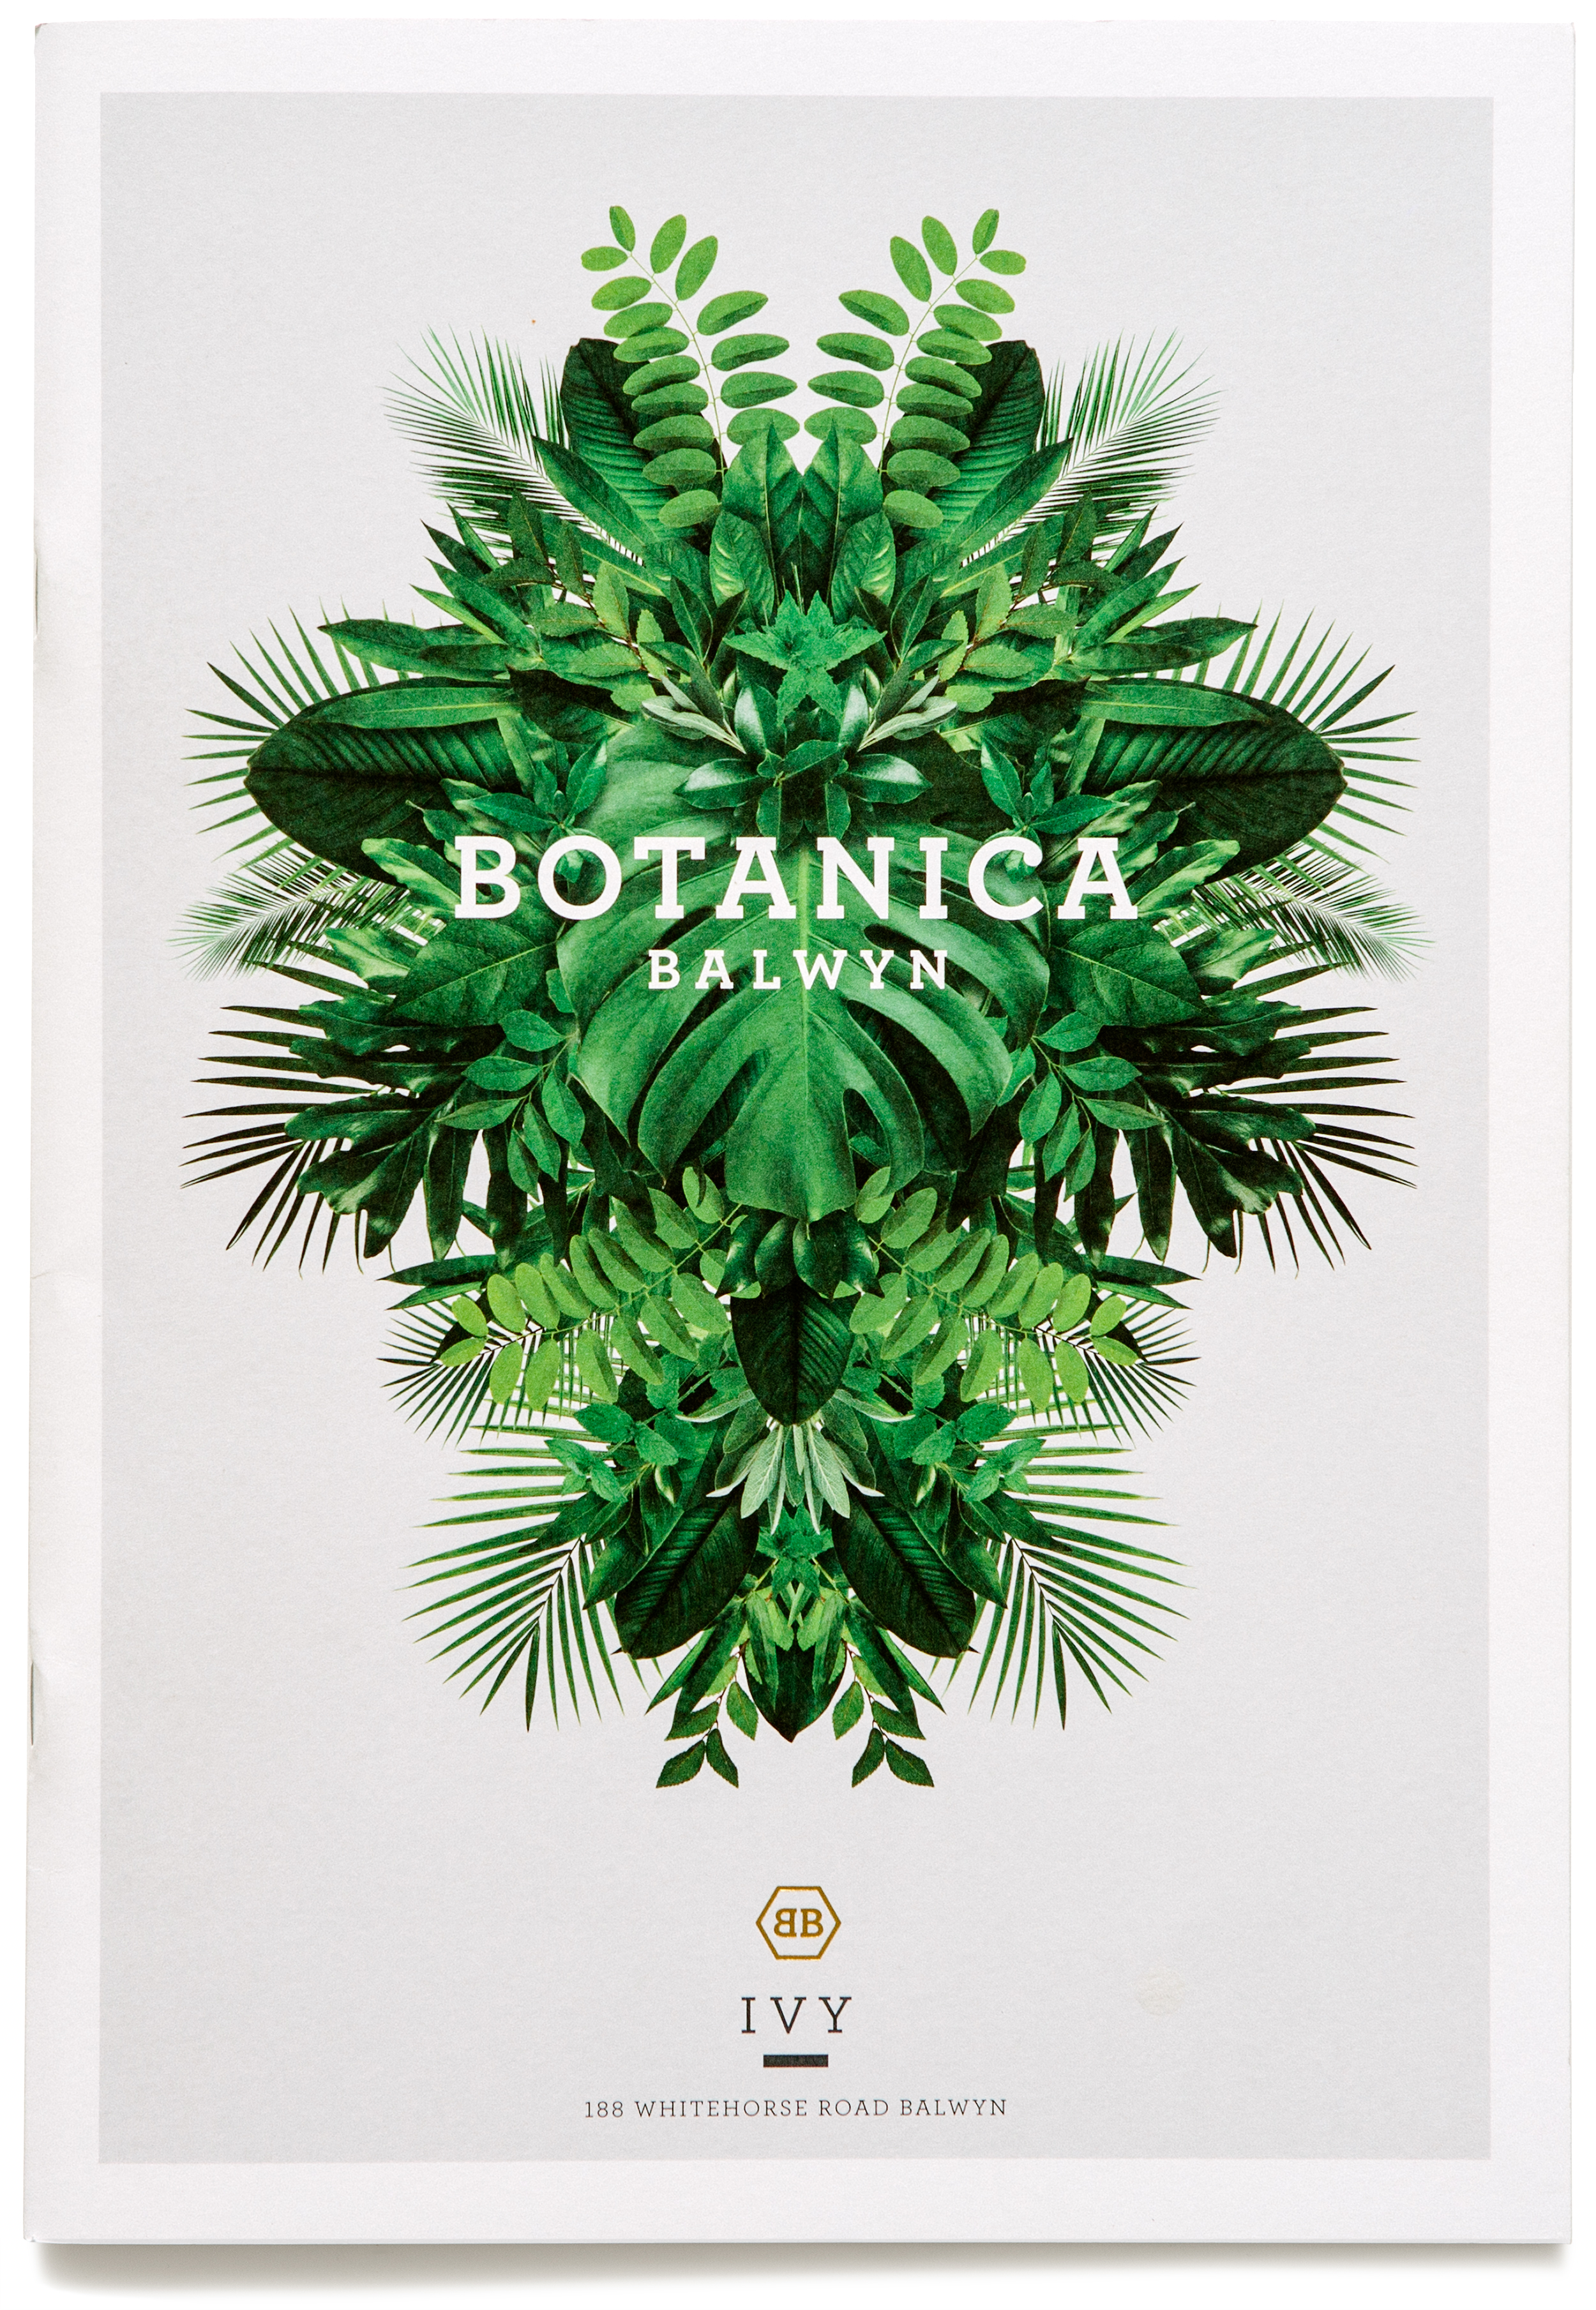 'Botanica' apartment brochure